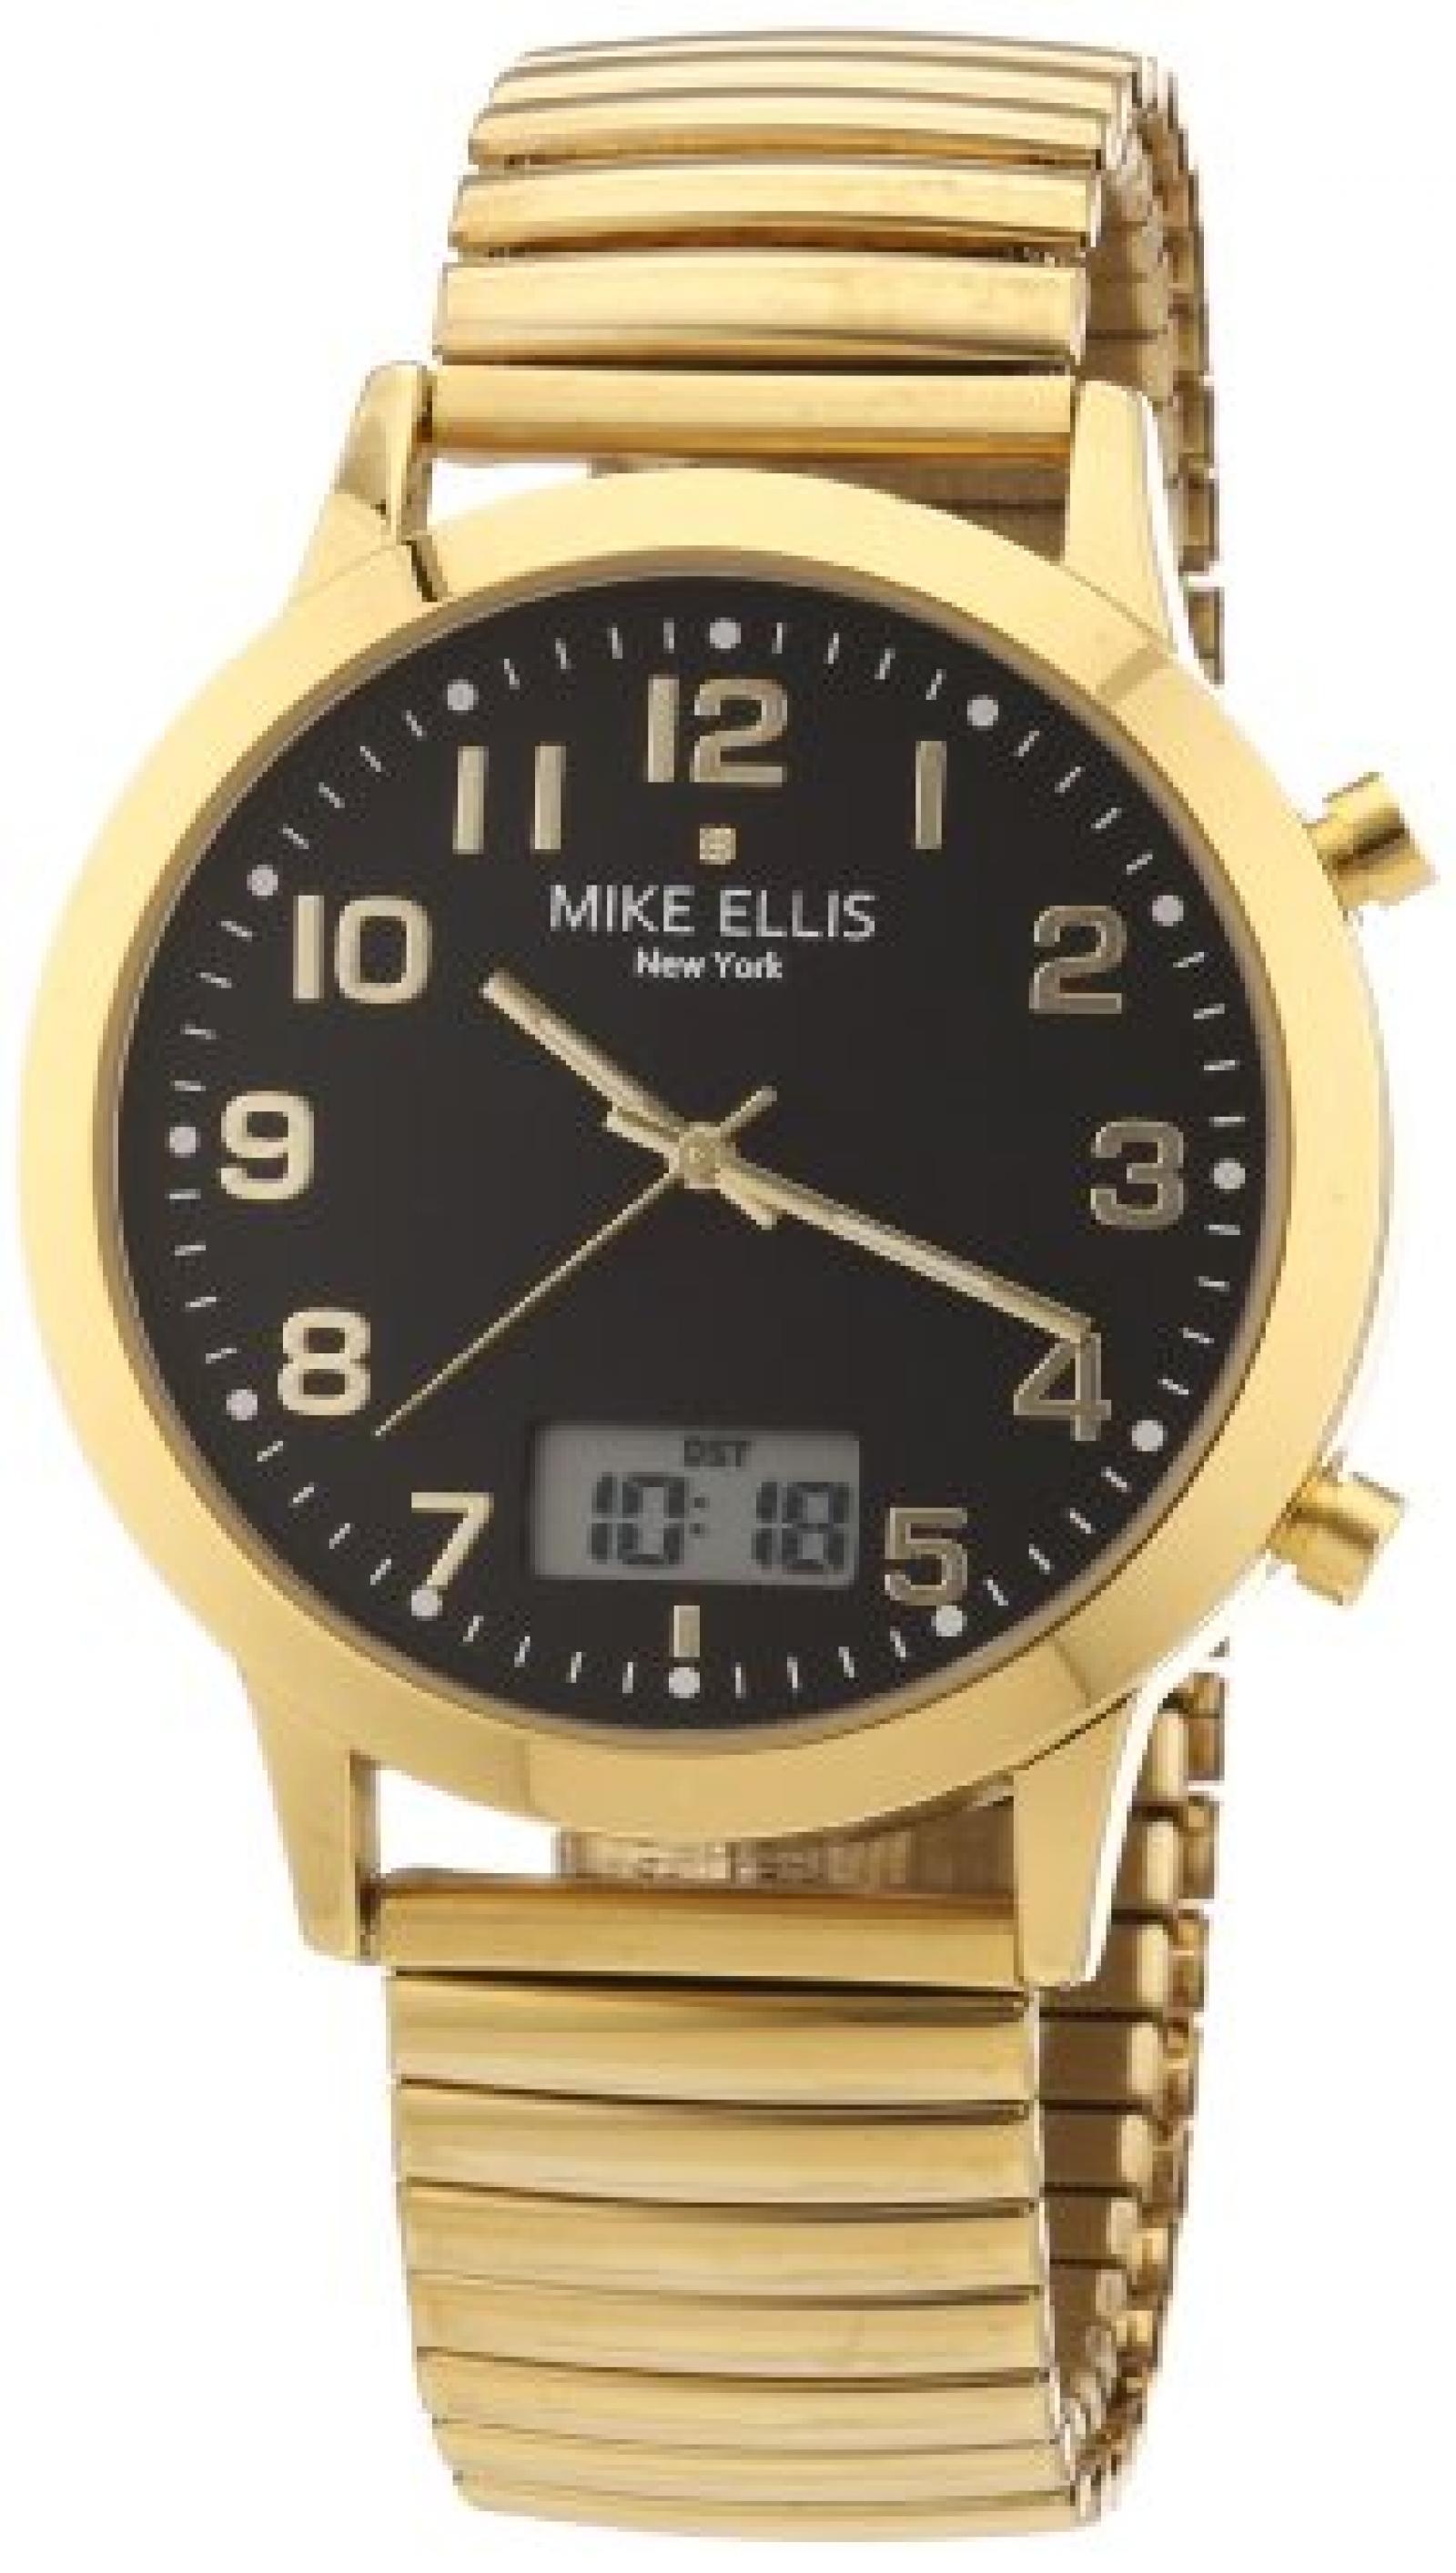 Mike Ellis New York Herren-Armbanduhr XS Analog - Digital Quarz Edelstahl beschichtet M2612AGM/2 